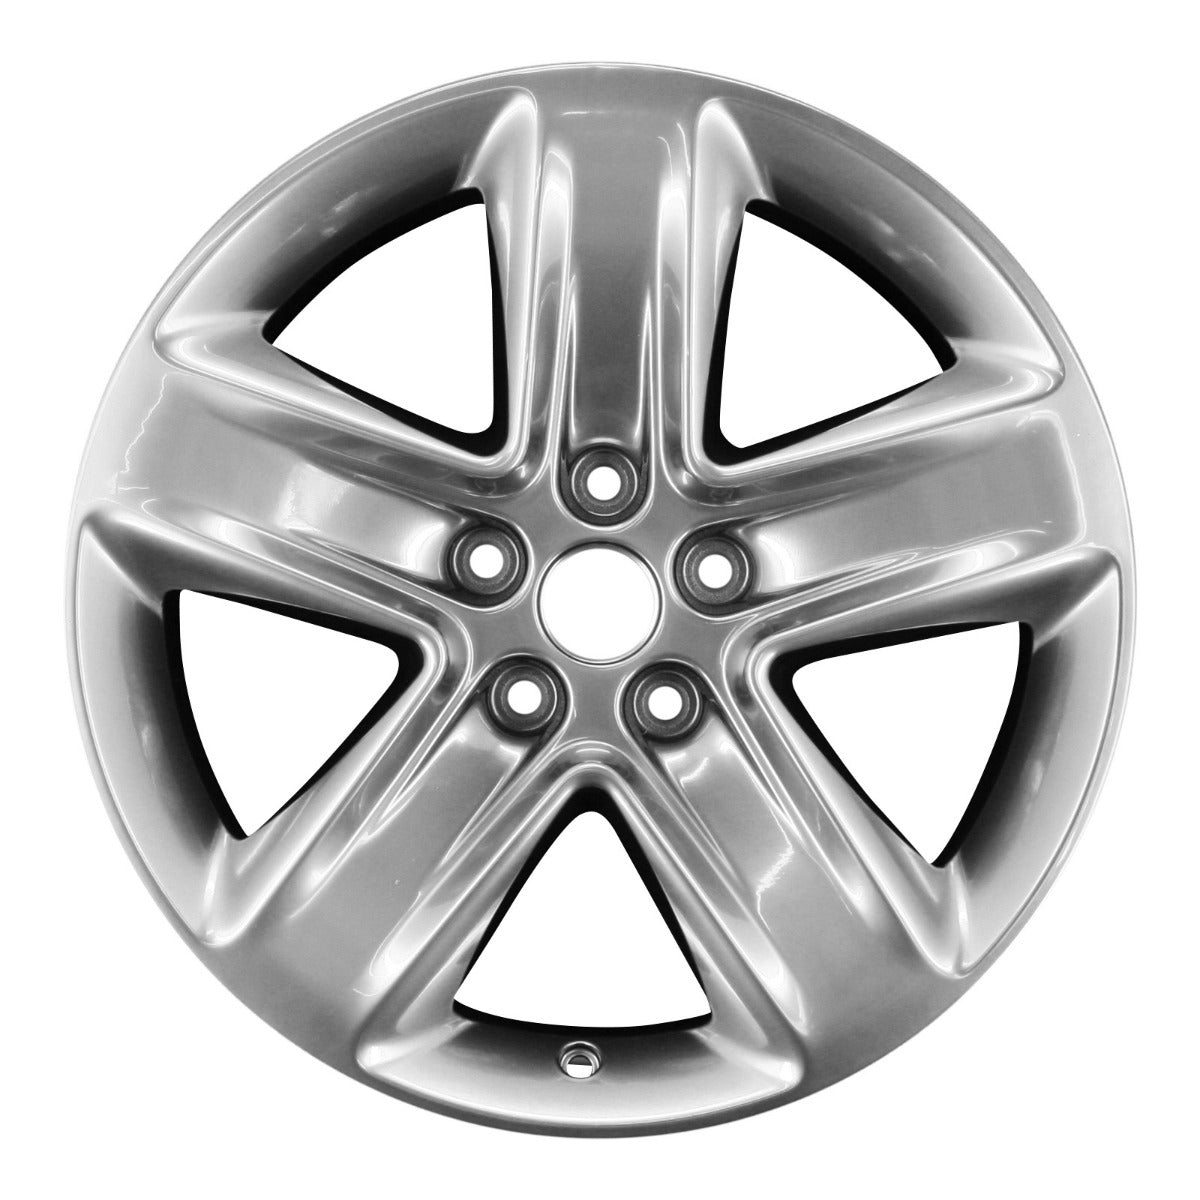 2013 Ford Fusion 18" OEM Wheel Rim W3800H